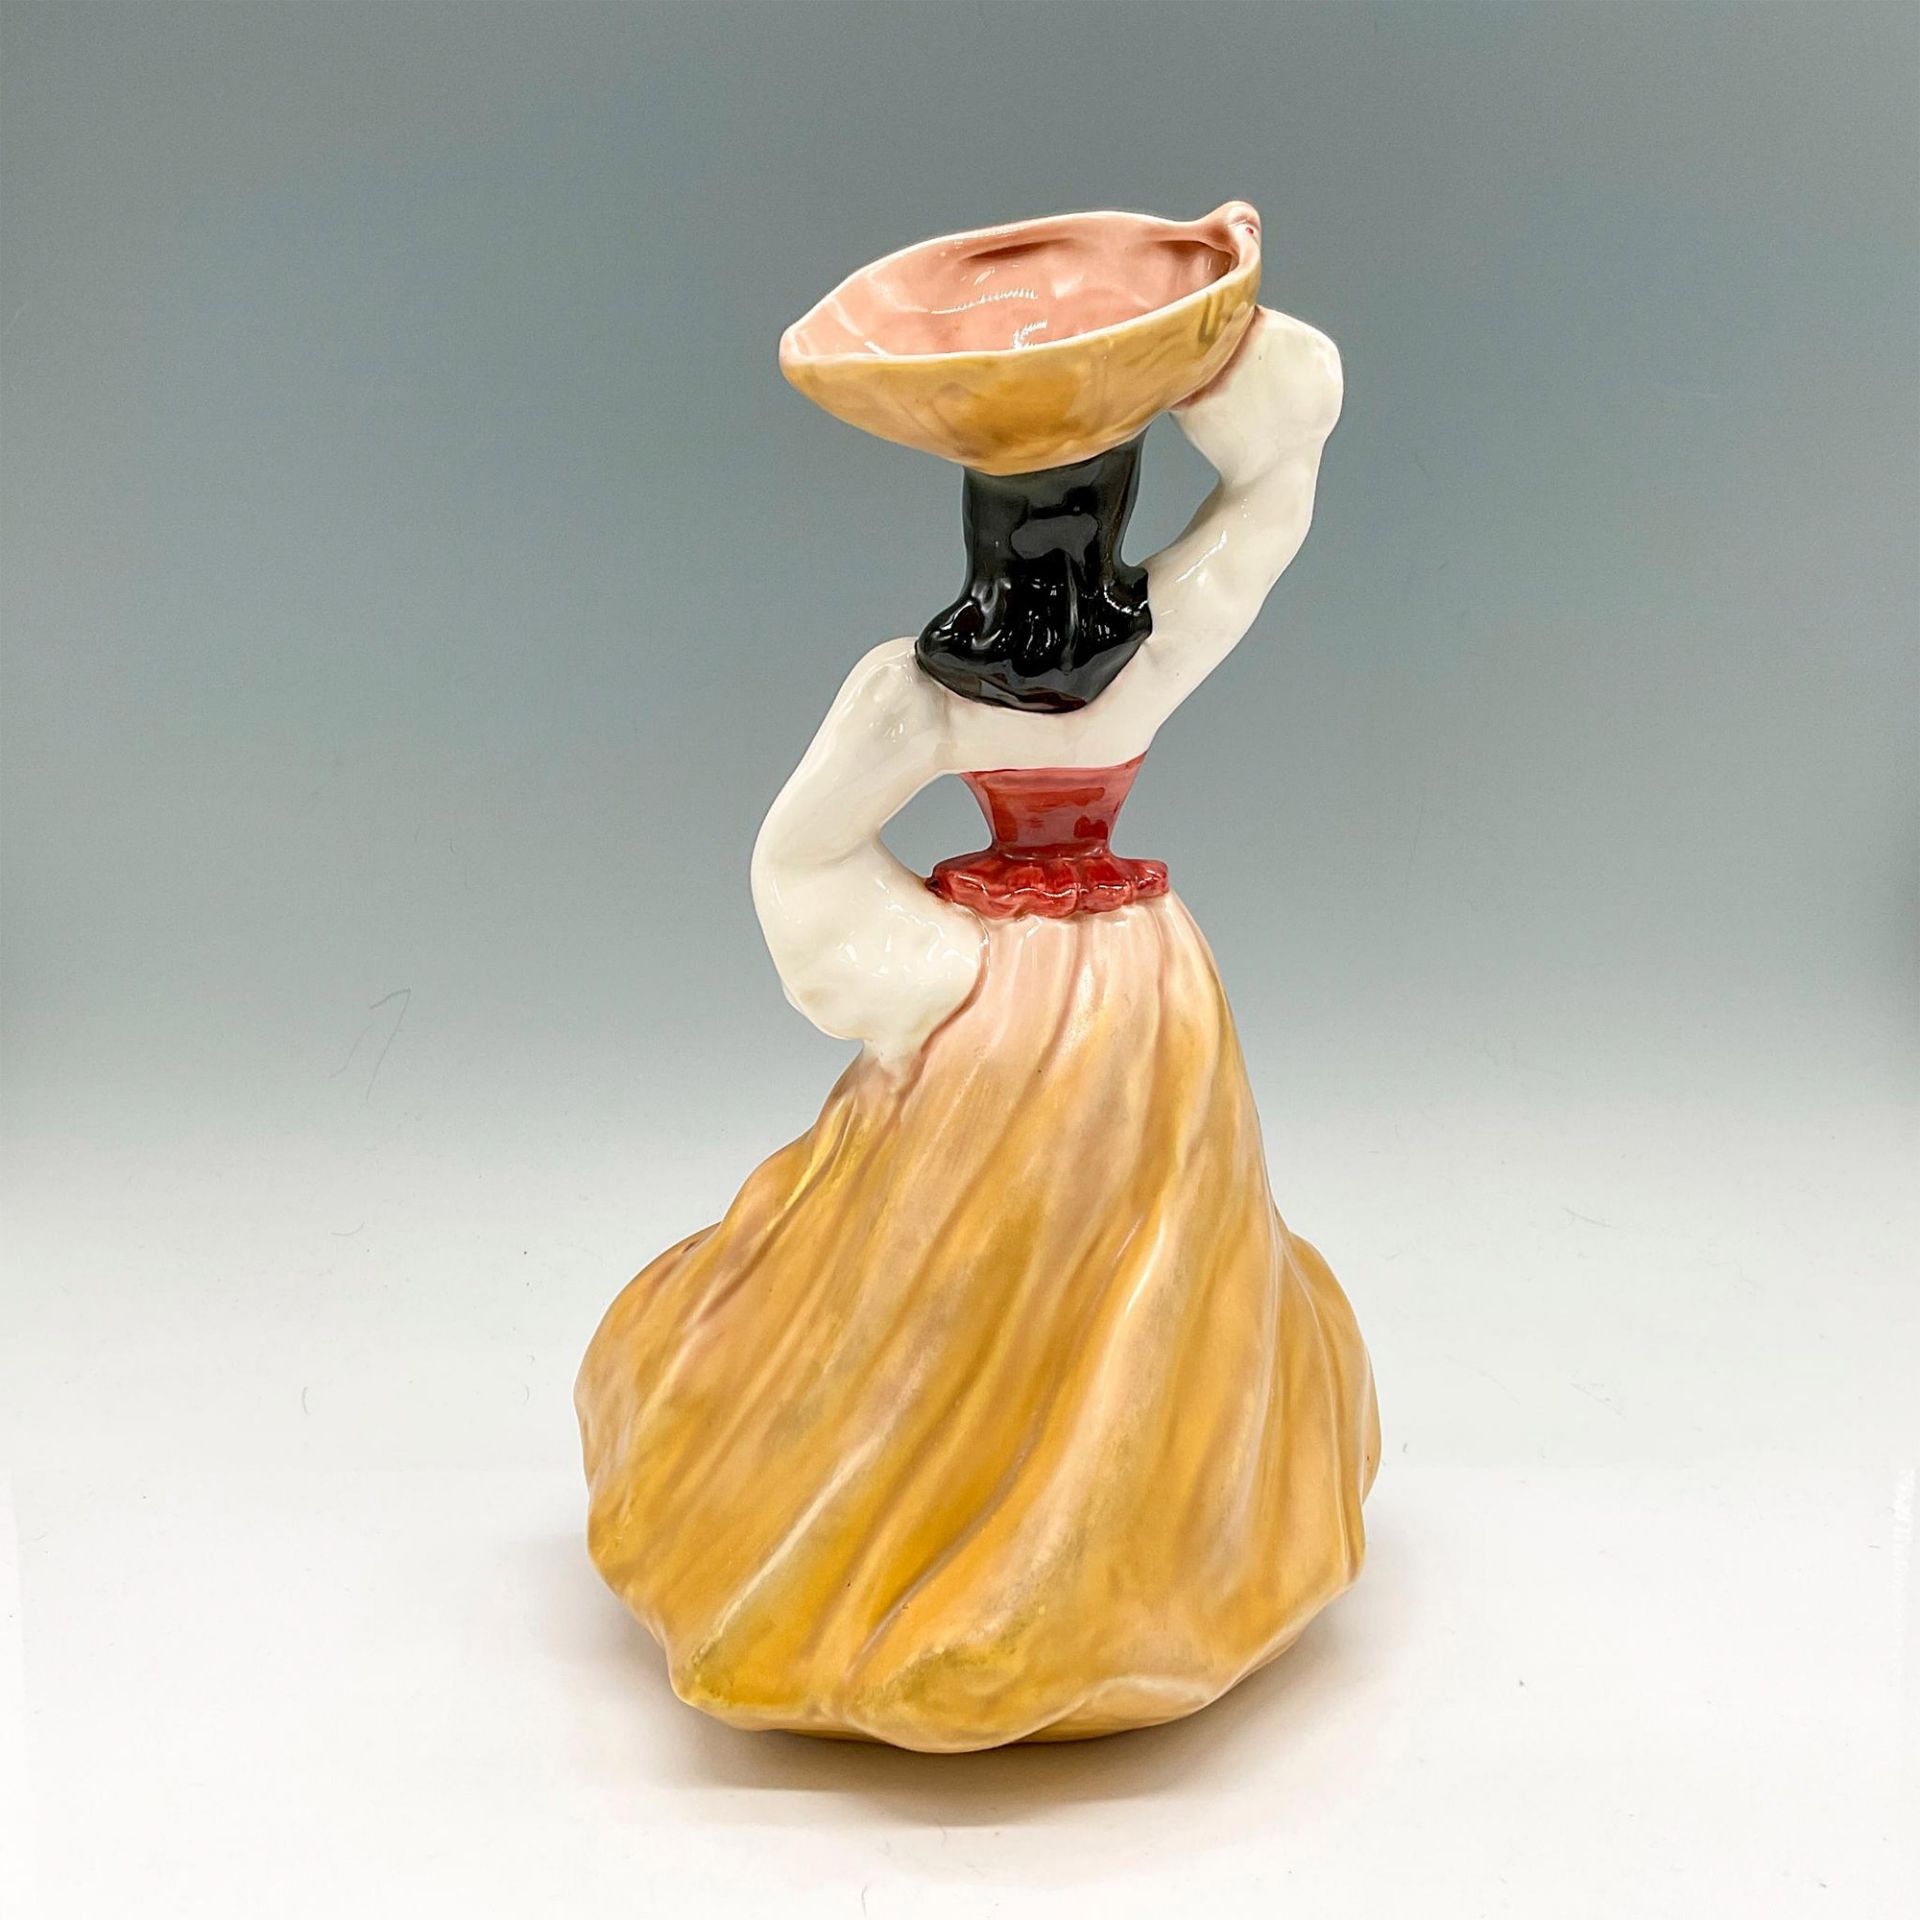 Florence Ceramics Porcelain Figurine, Ava - Image 2 of 3